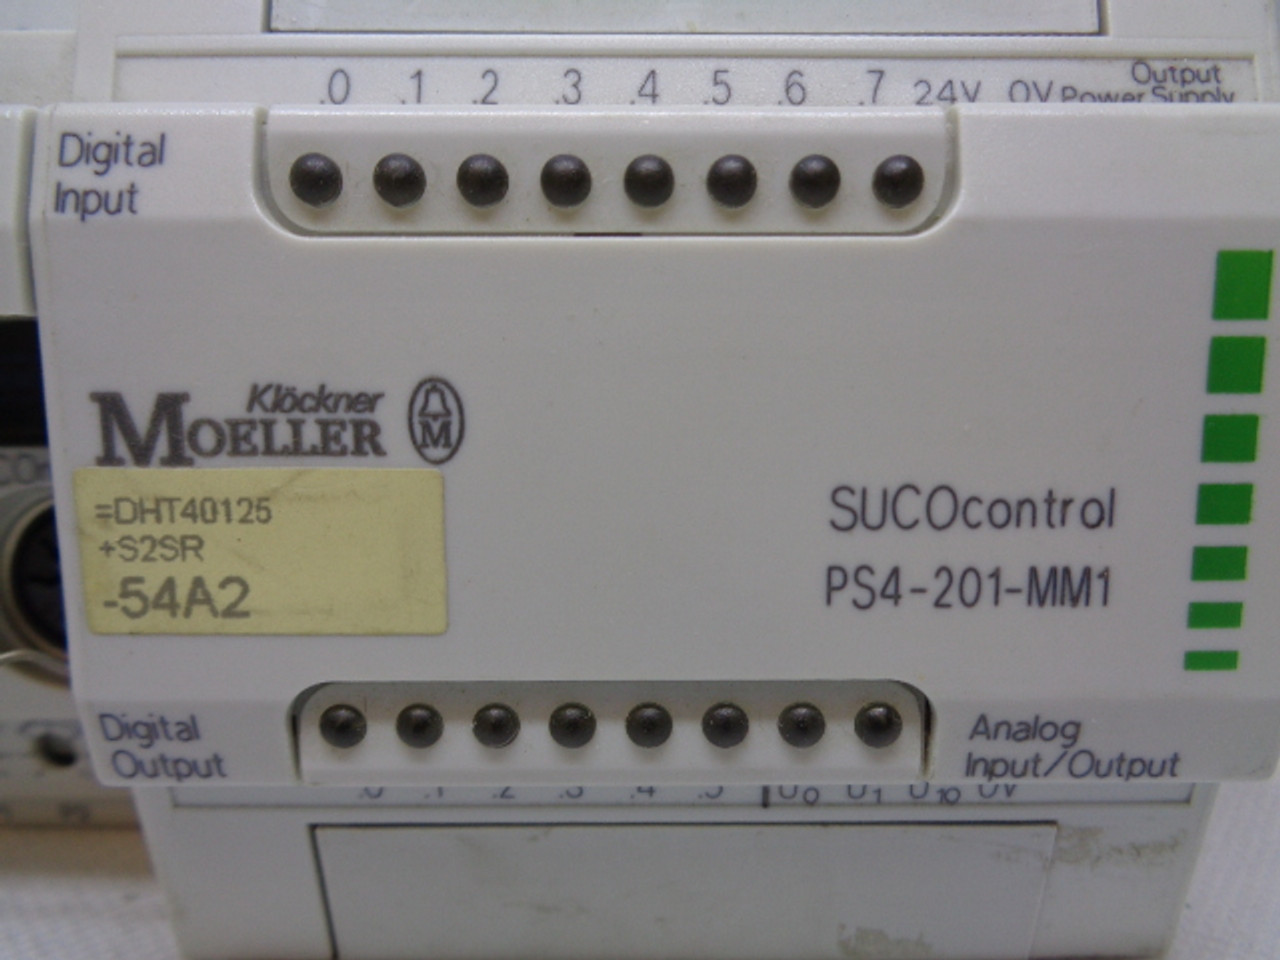 Klockner Moeller PS4-201-MM1 SUCO Compact Programmable Logic Controller